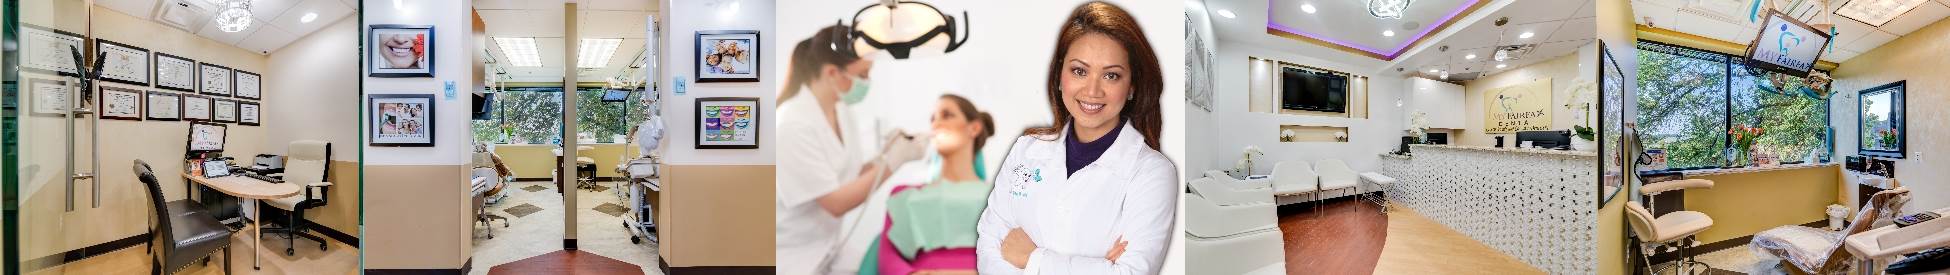 Patient Education Dental Videos